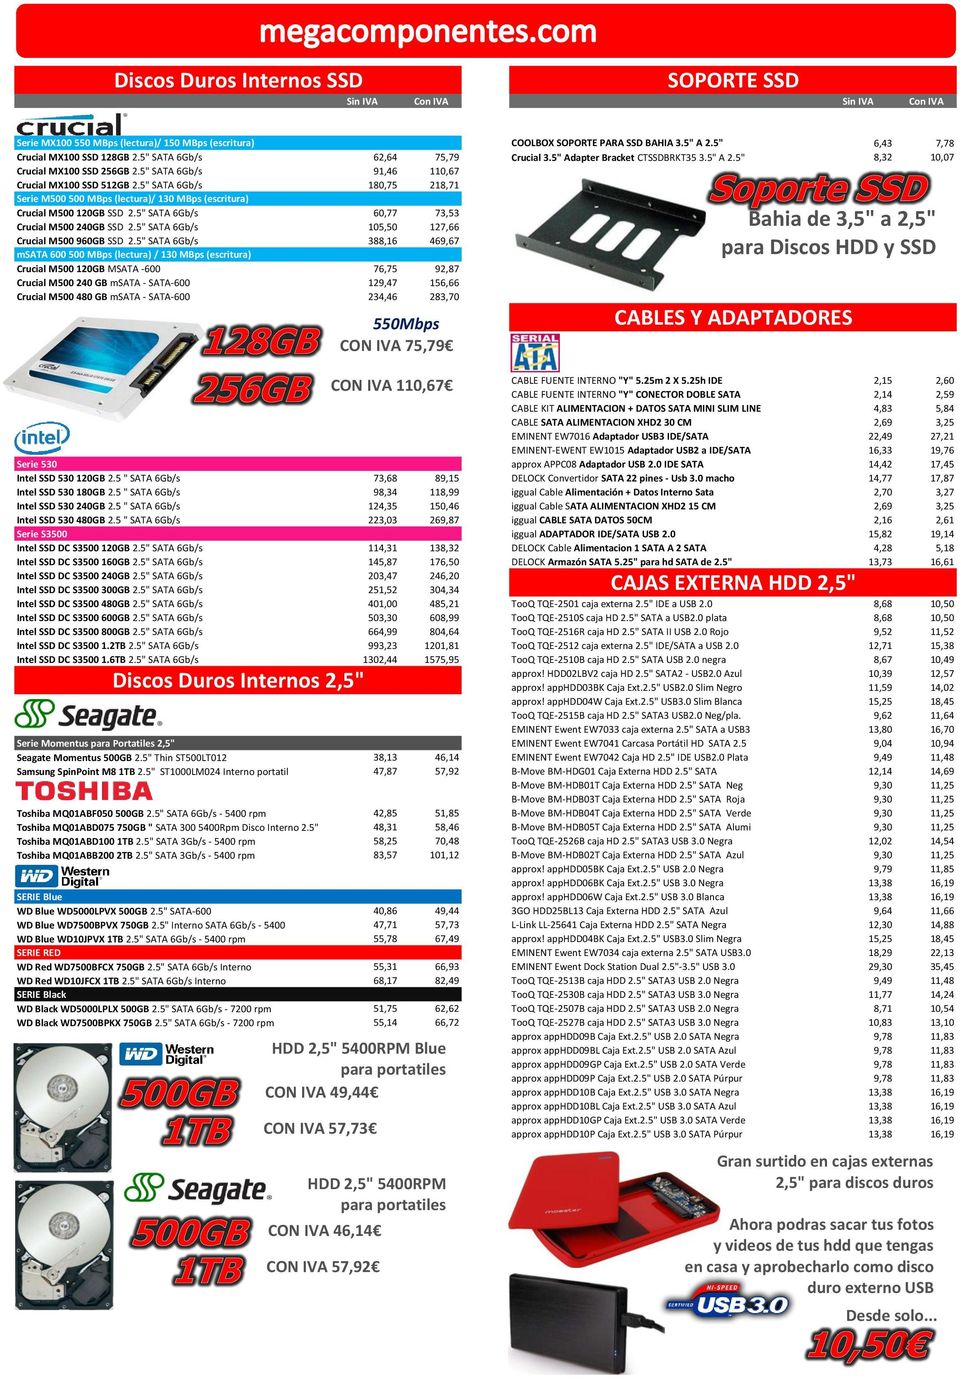 5" SATA 6Gb/s 91,46 110,67 Crucial MX100 SSD 512GB 2.5" SATA 6Gb/s 180,75 218,71 Serie M500 500 MBps (lectura)/ 130 MBps (escritura) Crucial M500 120GB SSD 2.